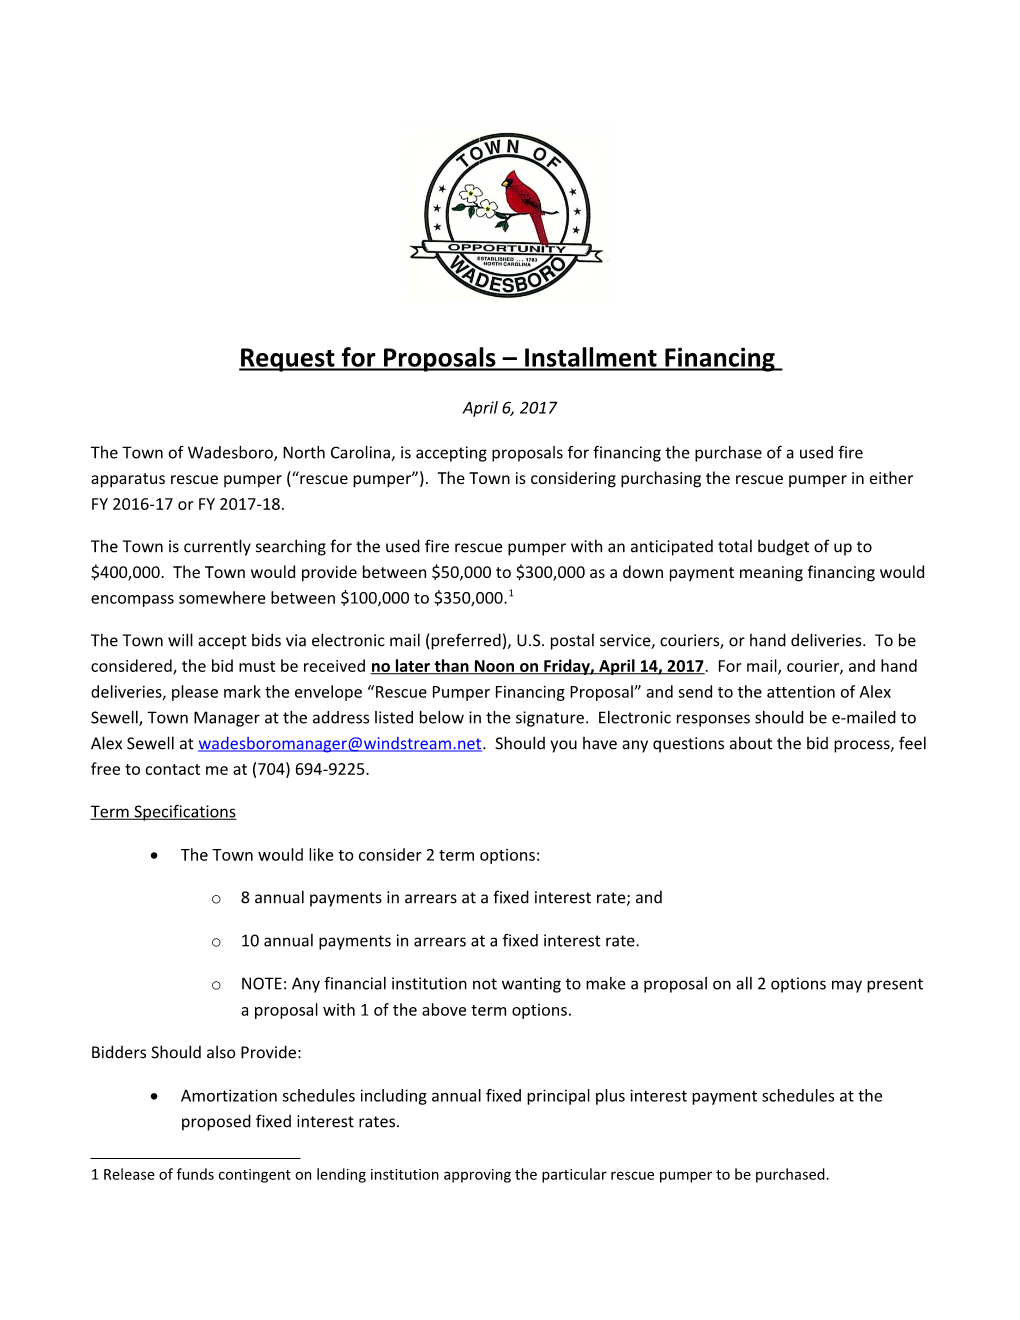 Request for Proposals Installment Financing